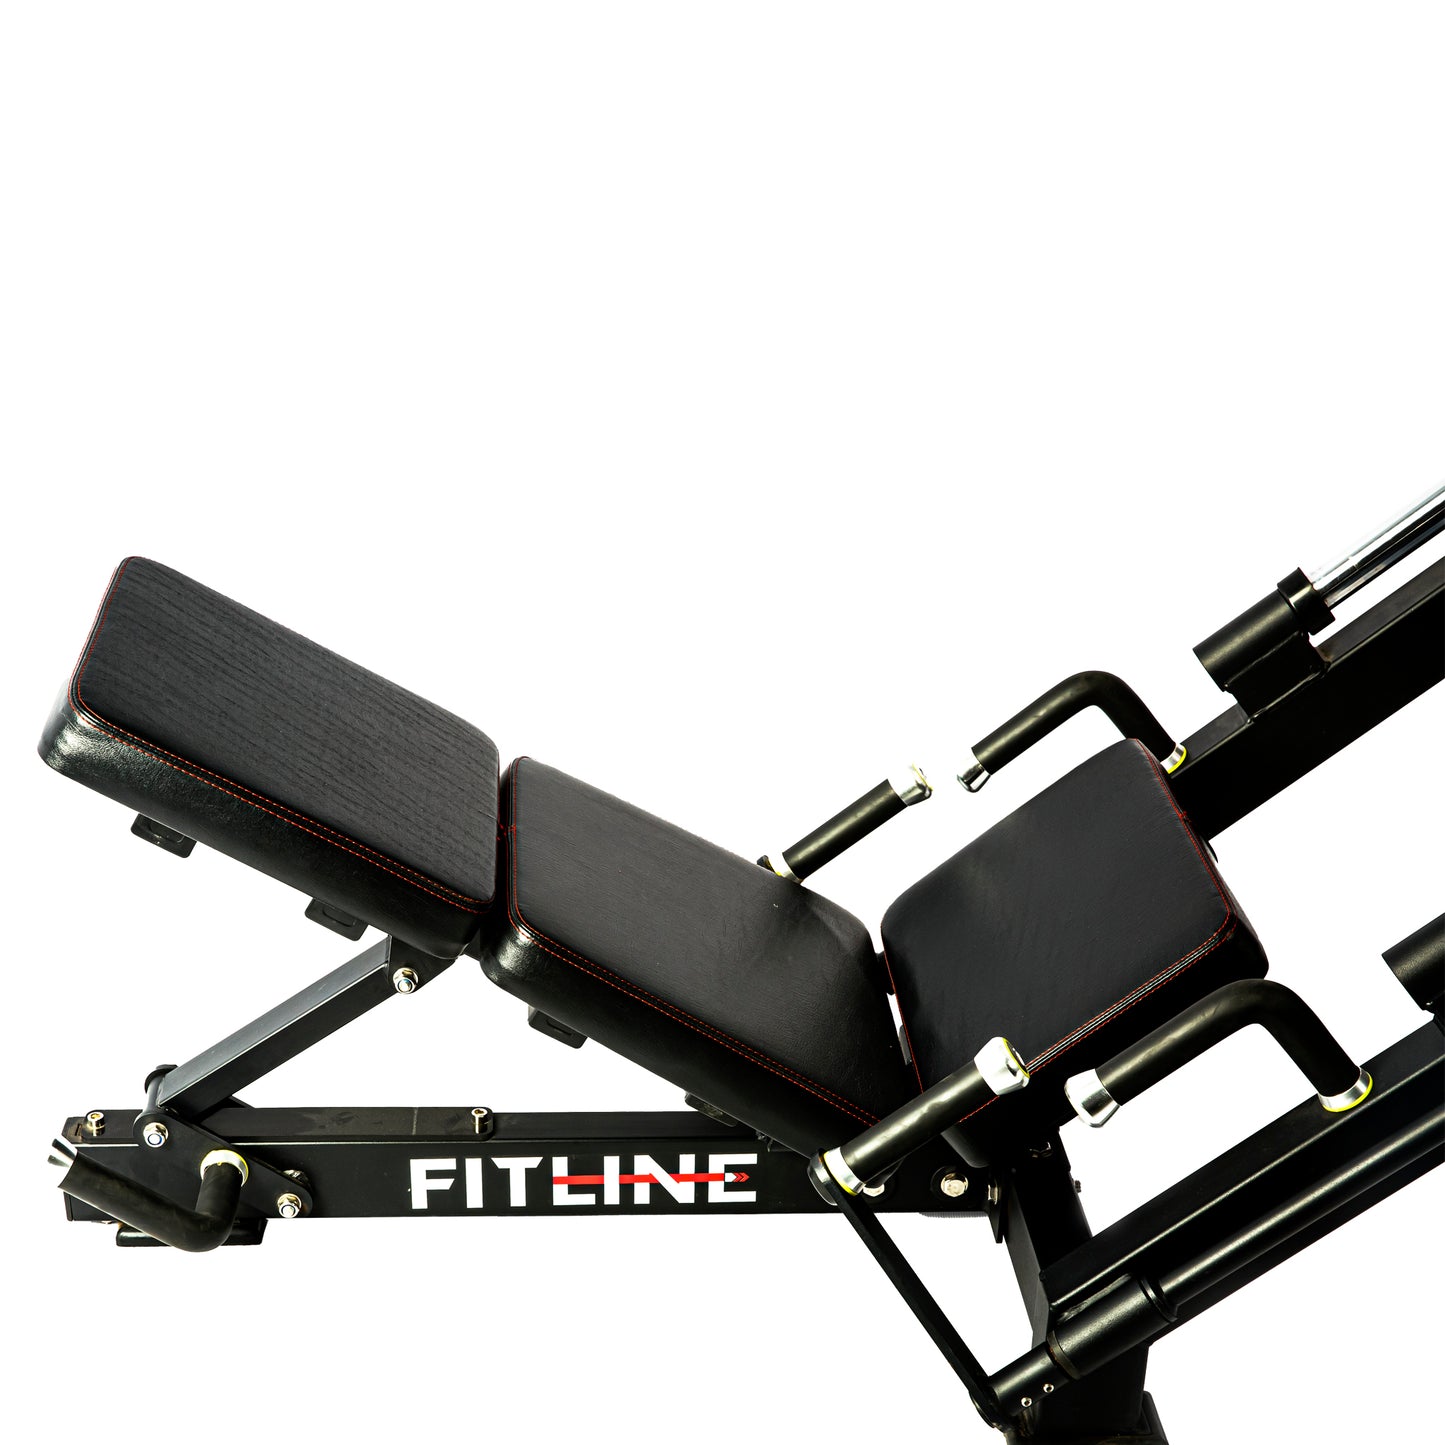 FitLine - 45 DEGREE LEG PRESS - Top Brands Fitness Equipment